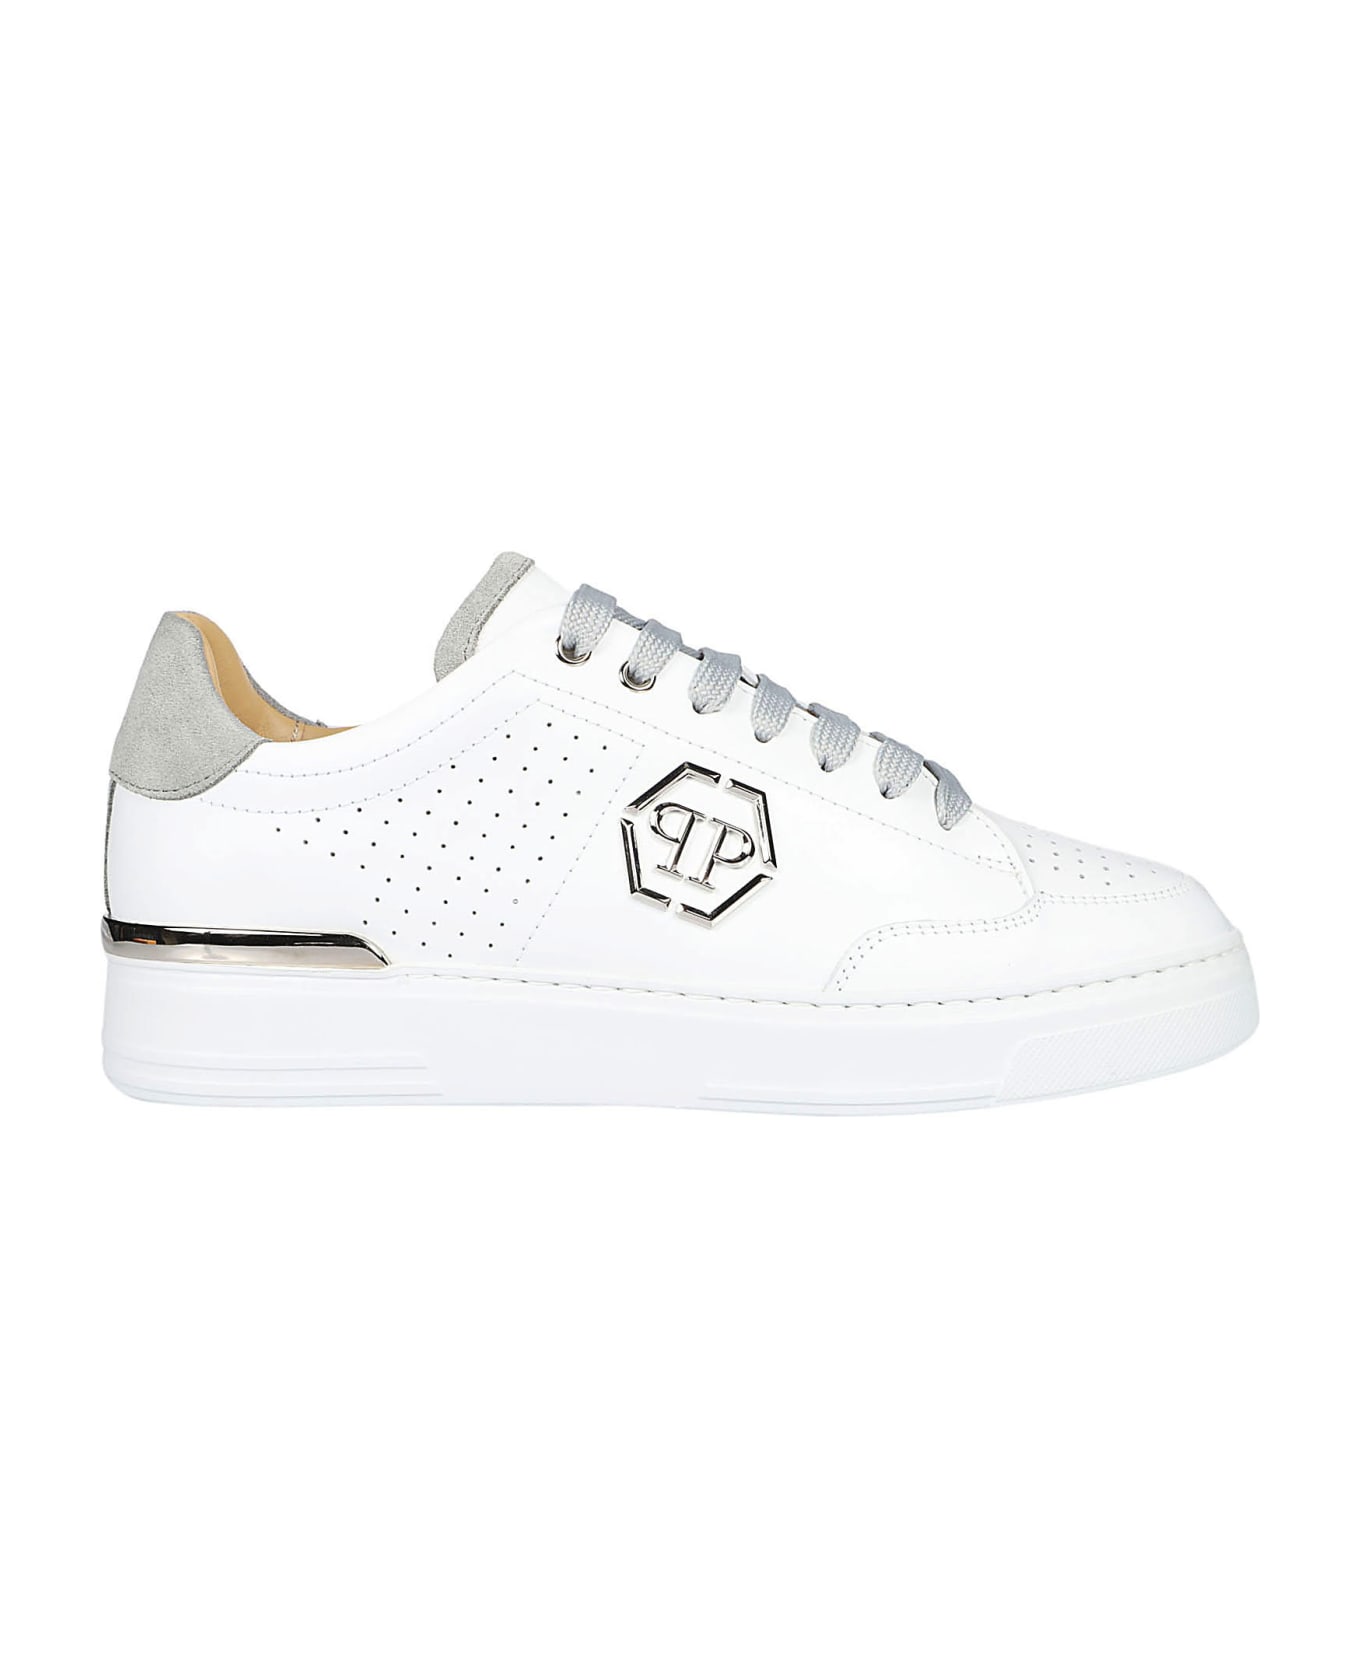 Philipp Plein Low Top Sneakers - White/grey スニーカー